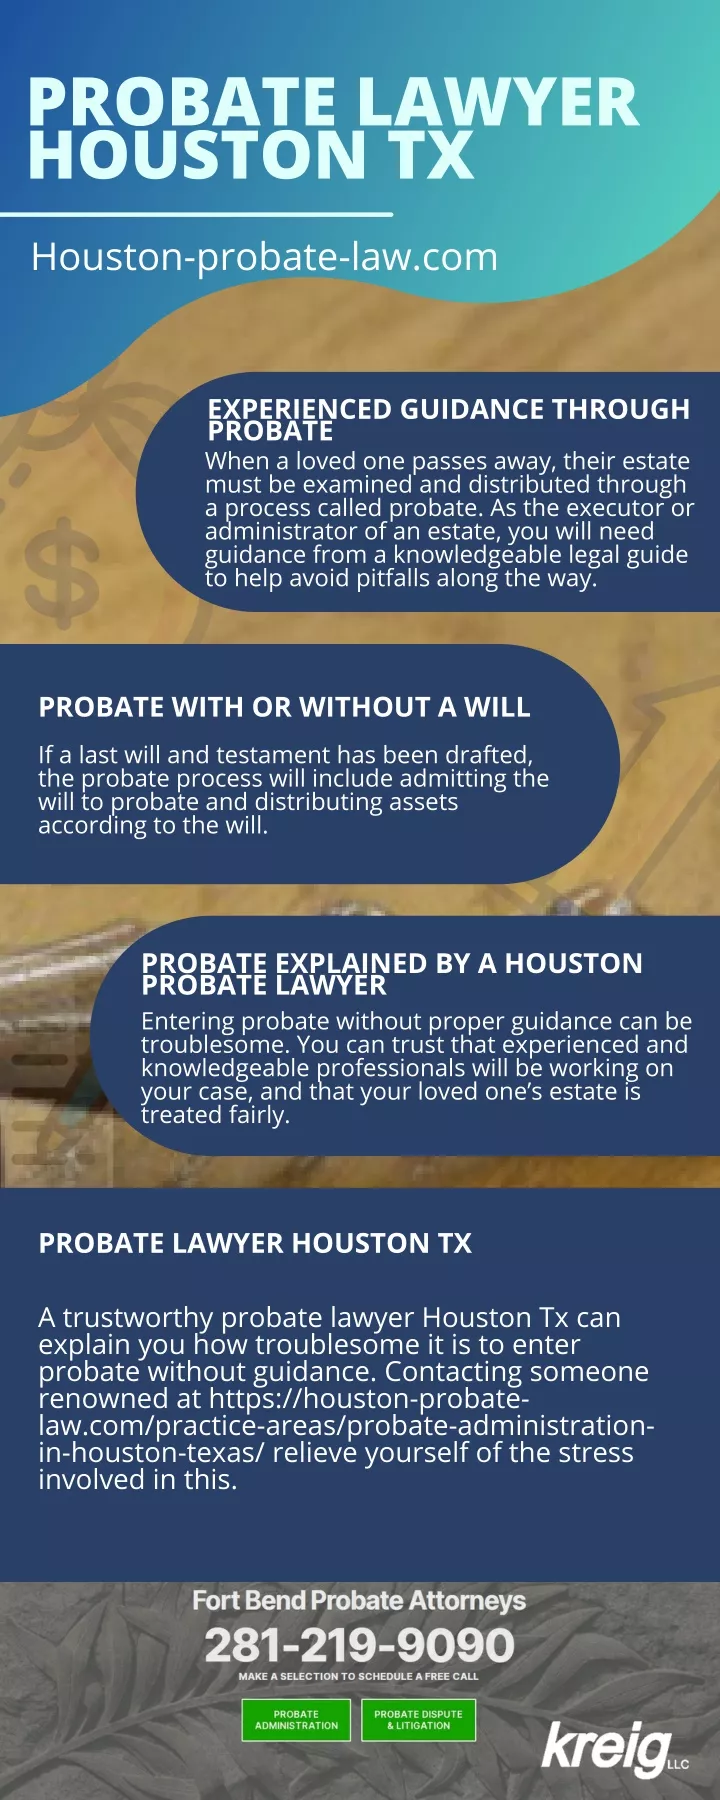 PPT Probate Lawyer Houston Tx Houston probate law com PowerPoint